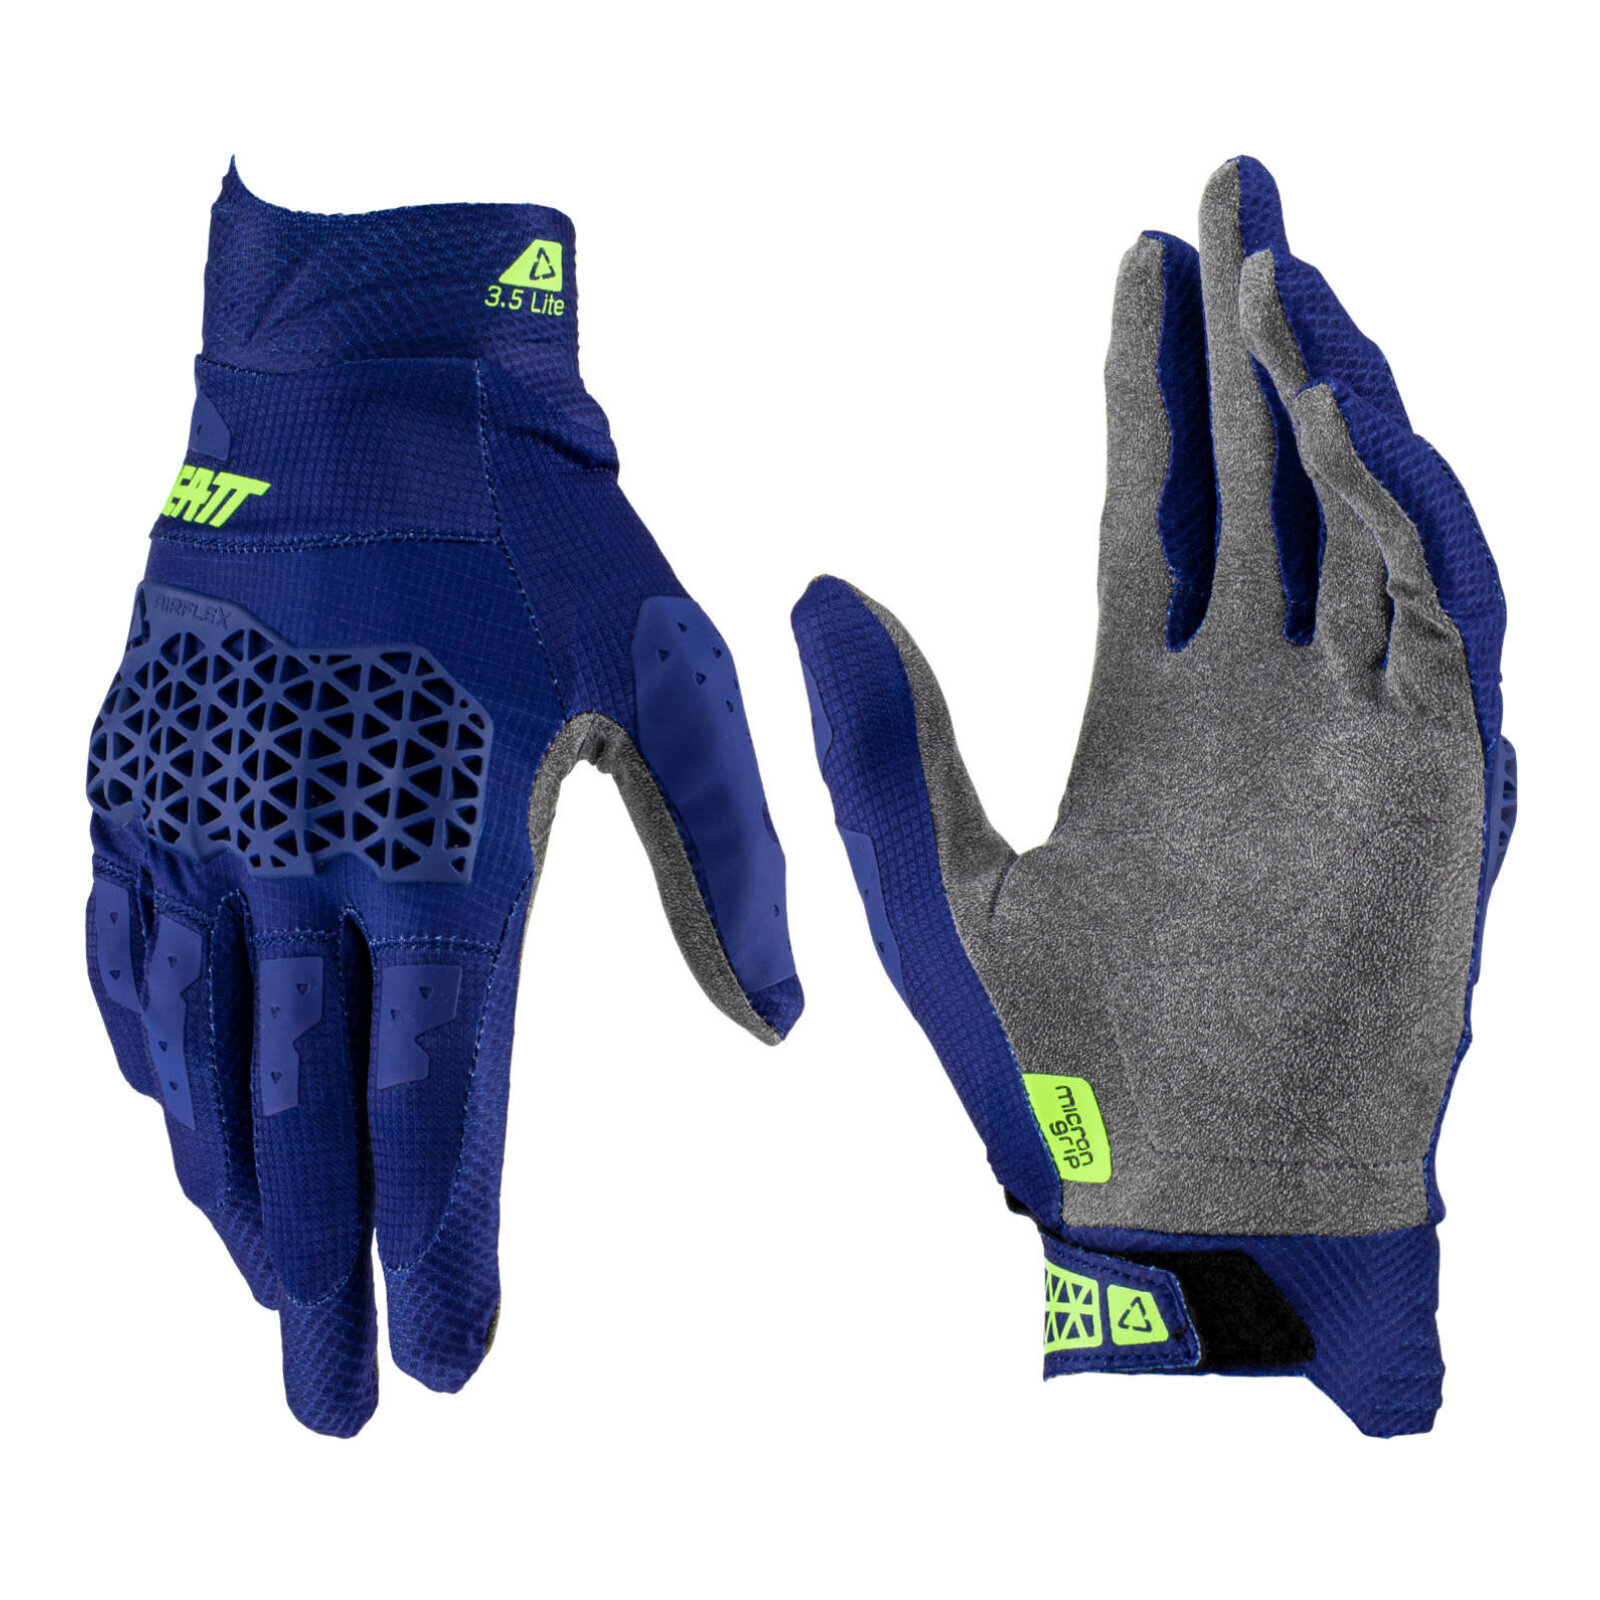 Leatt 2024 3.5 Lite Glove - Blue (S)